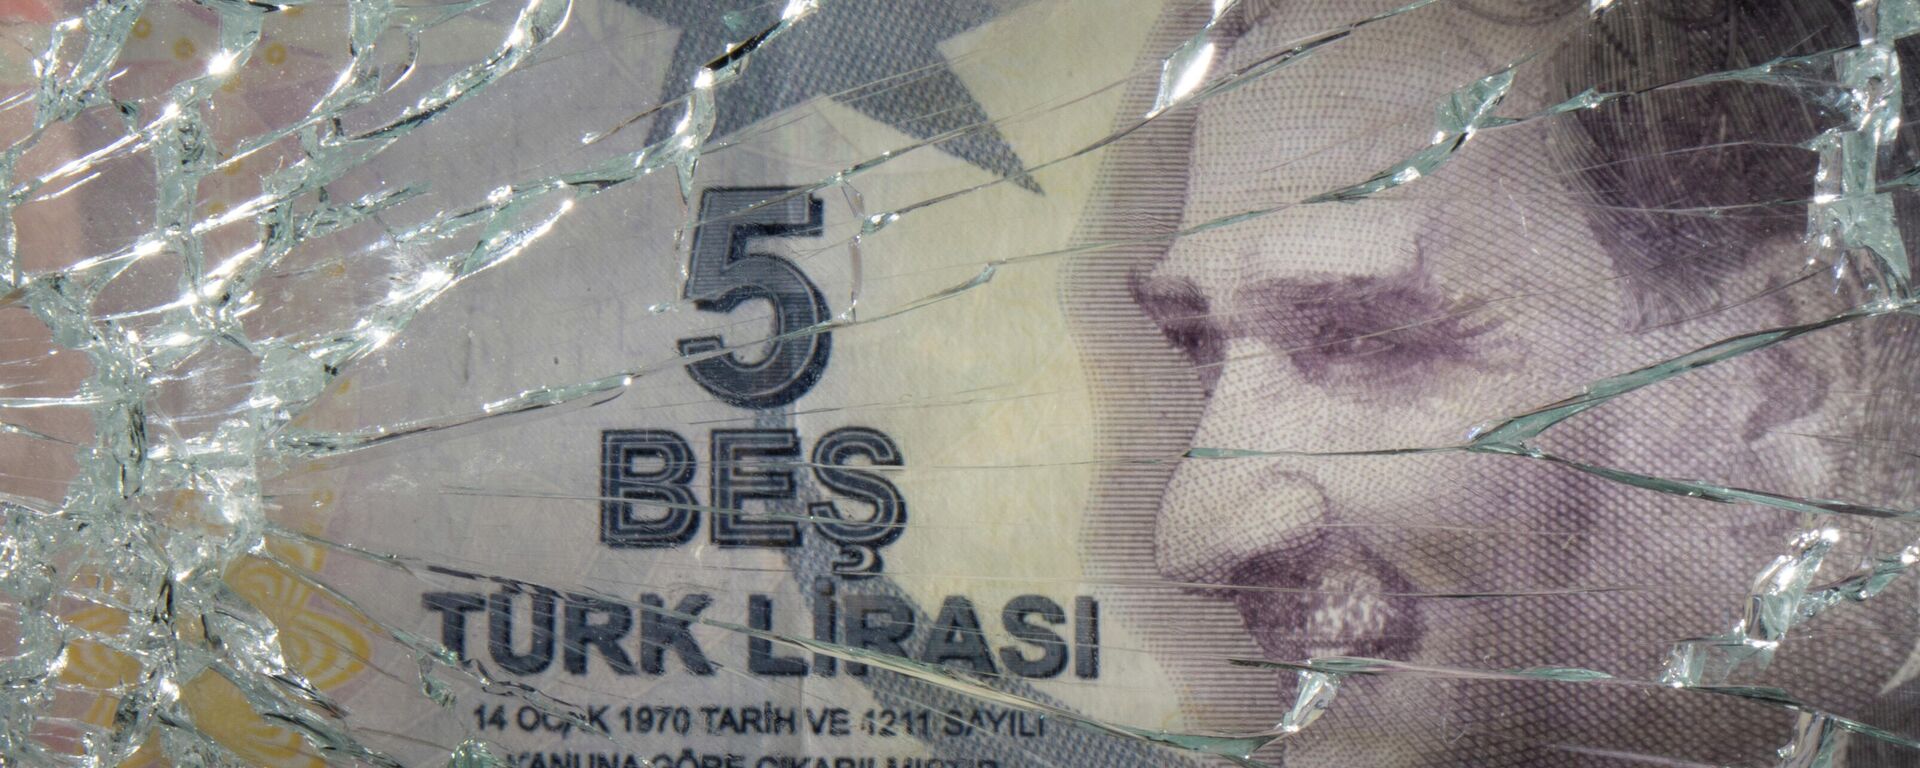 Разбитое стекло поверх банкноты турецкой лиры - Sputnik Азербайджан, 1920, 25.11.2021